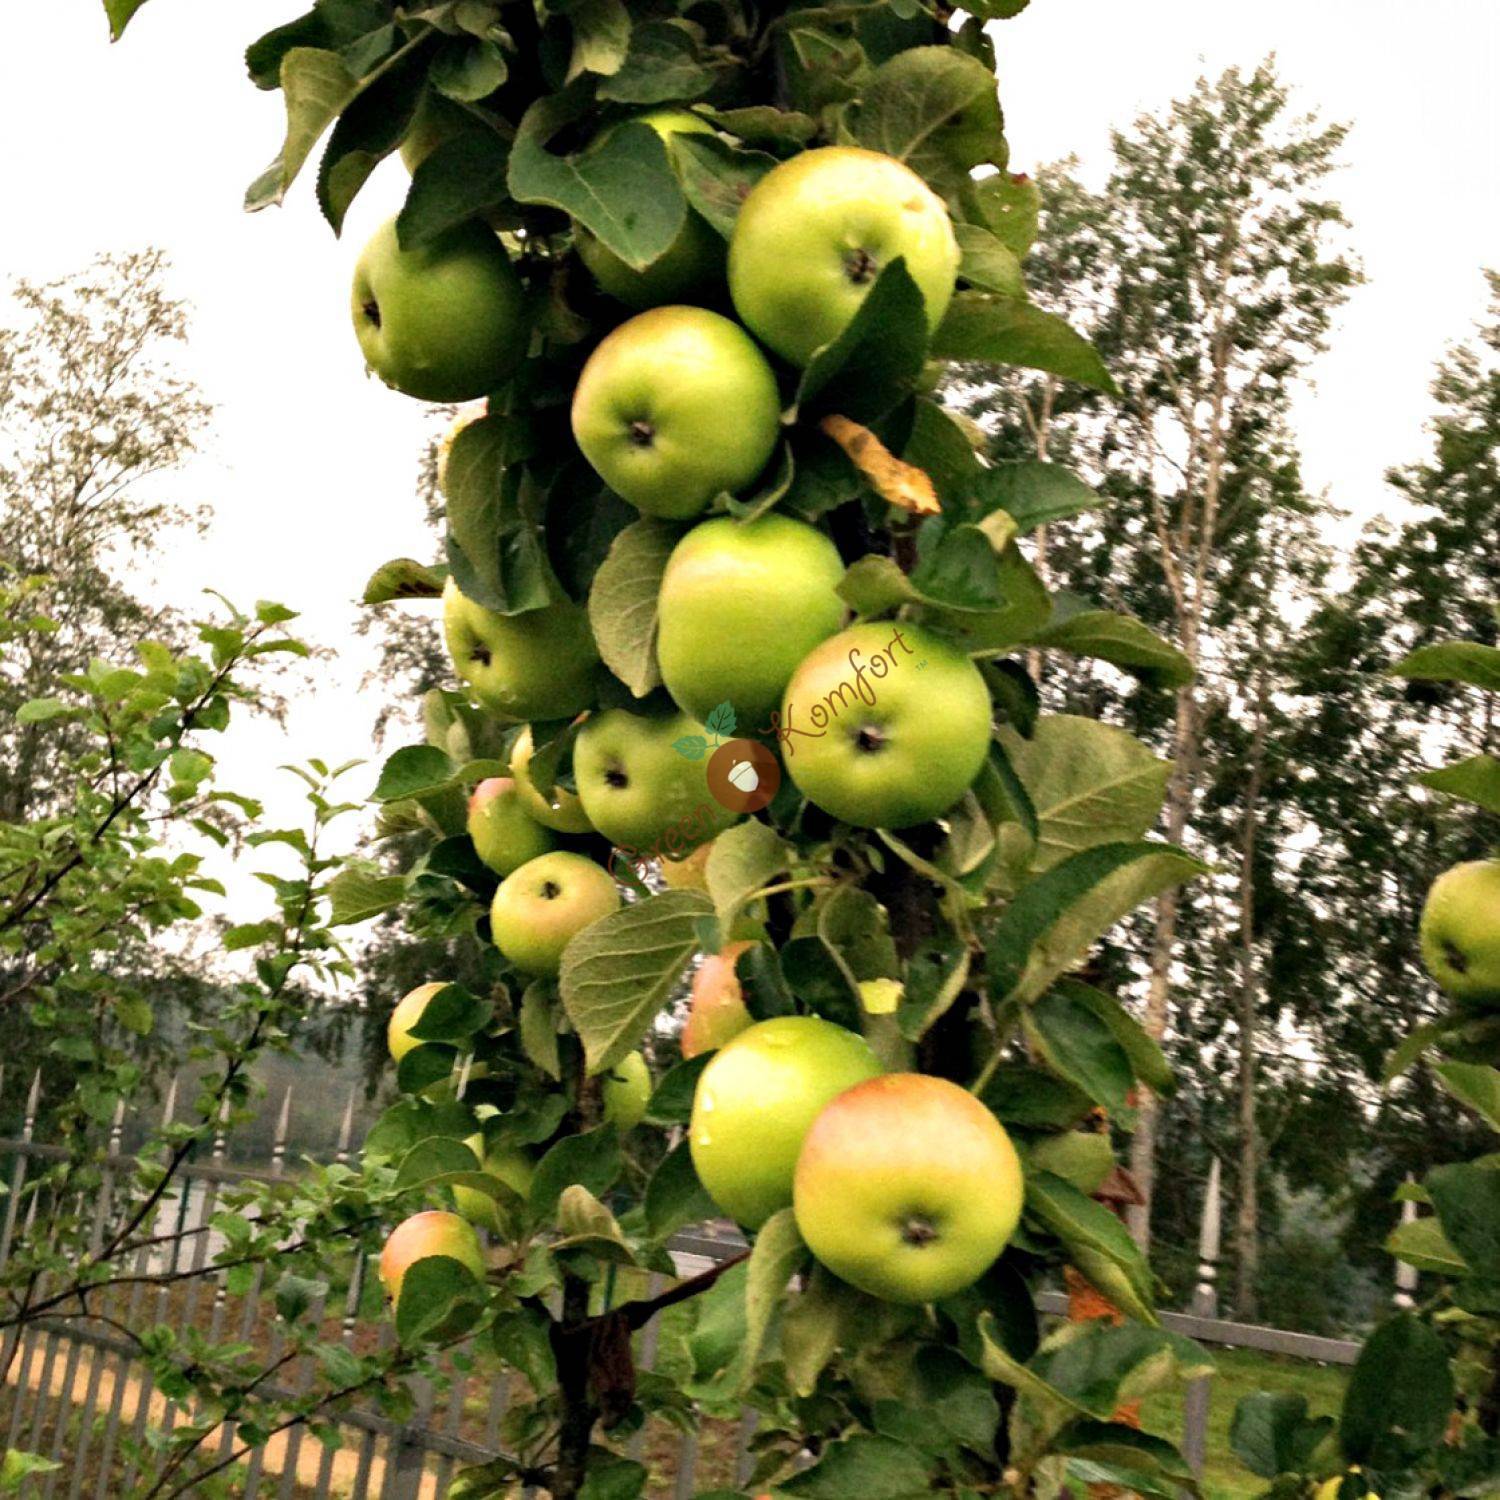 О колоновидной яблоне икша: описание и характеристики сорта, посадка и уход